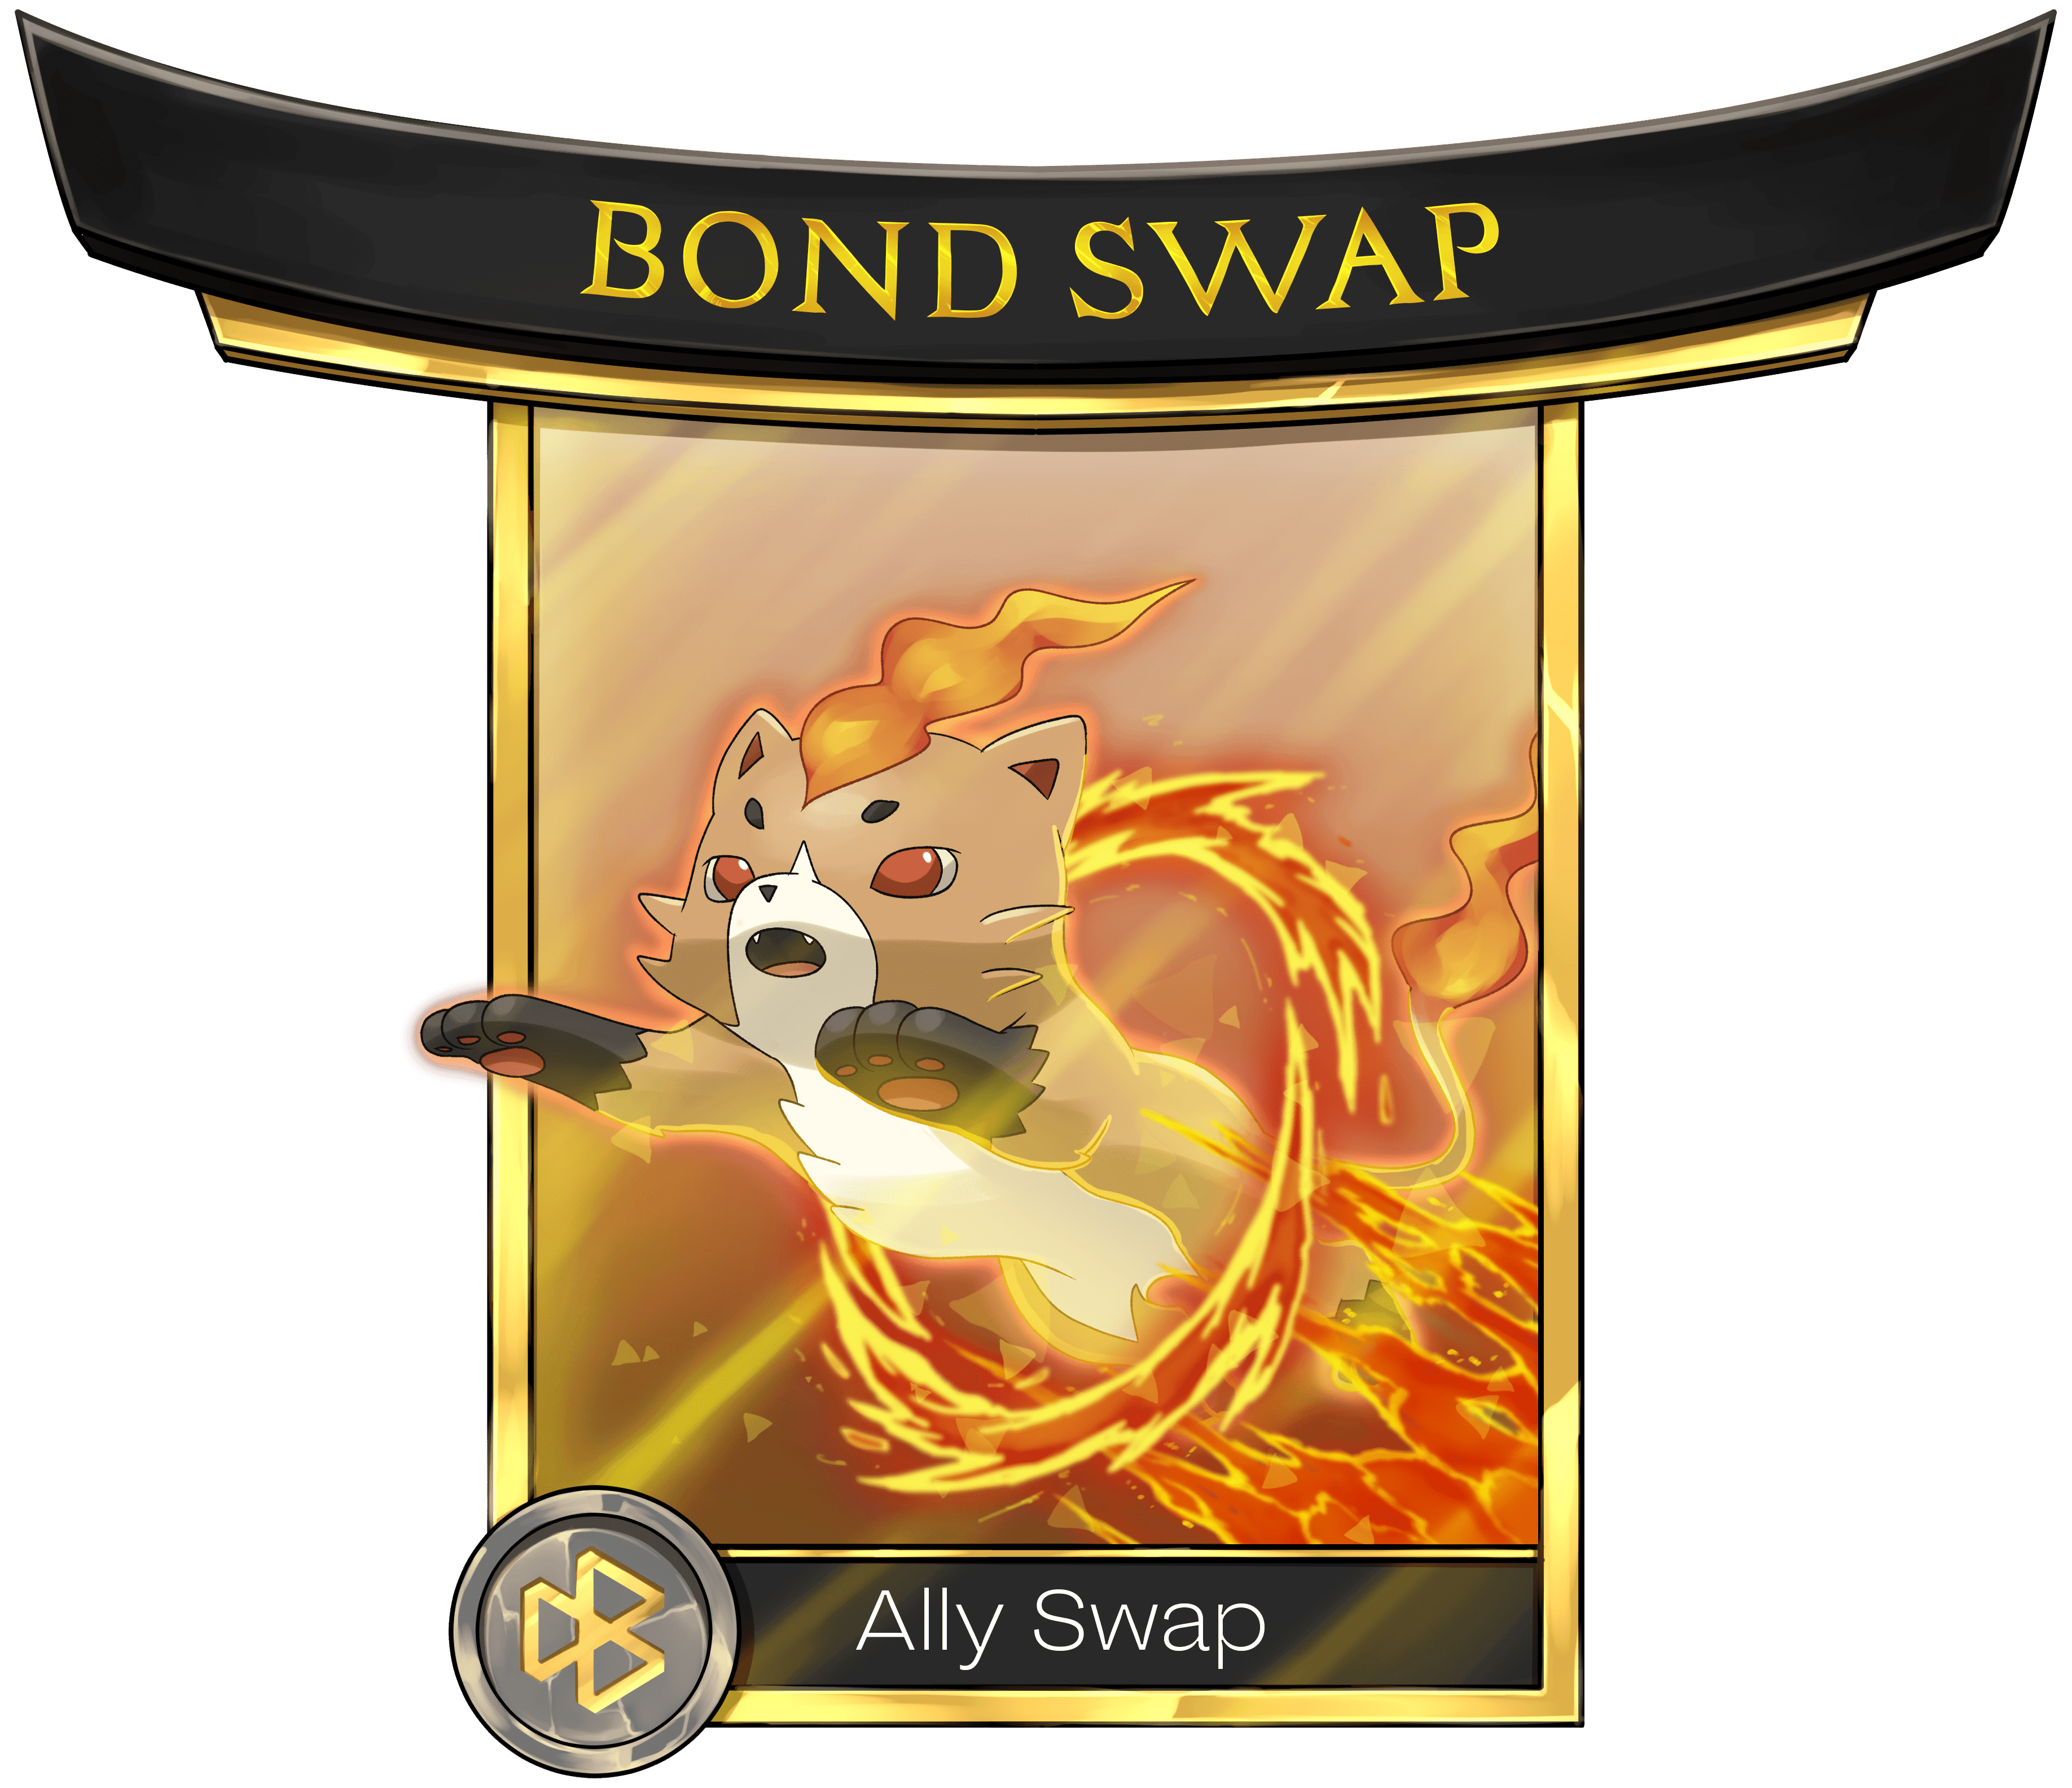 BondSwap (Ally Swap)